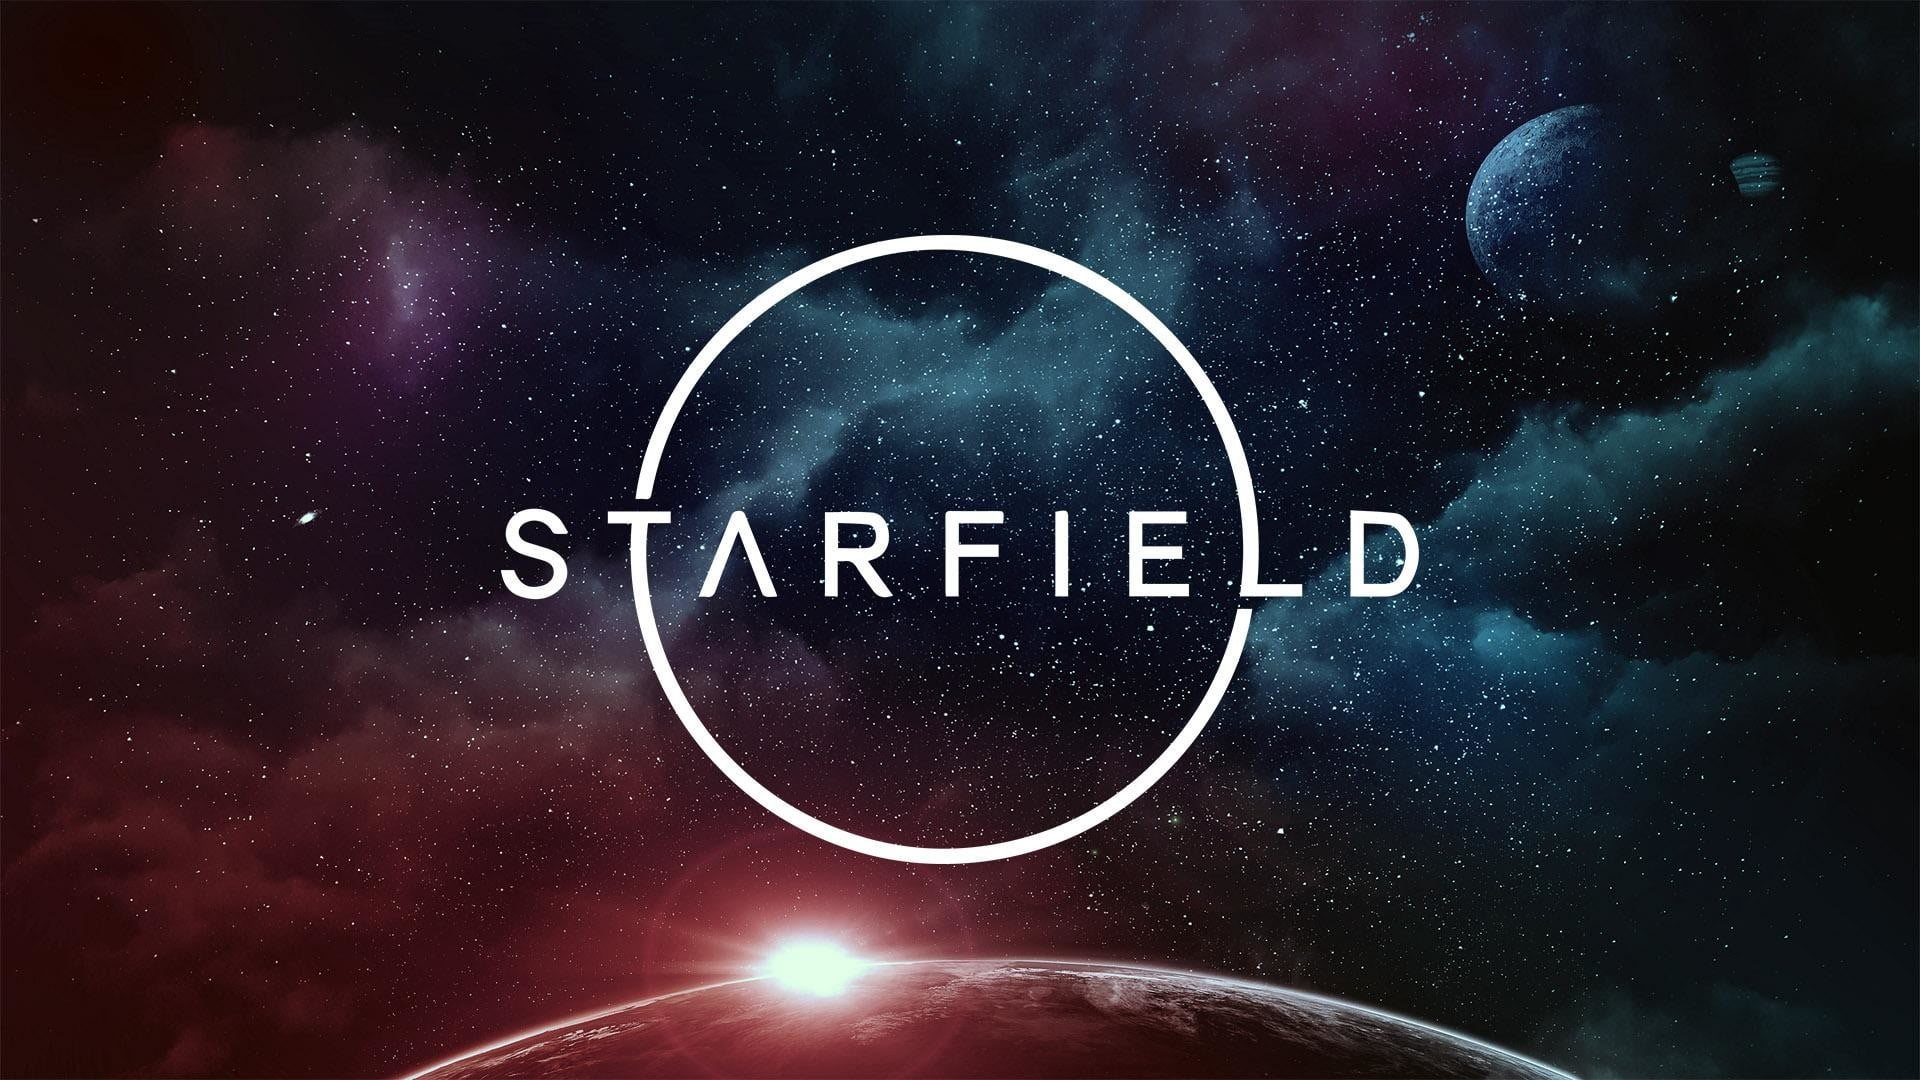 starfield logo